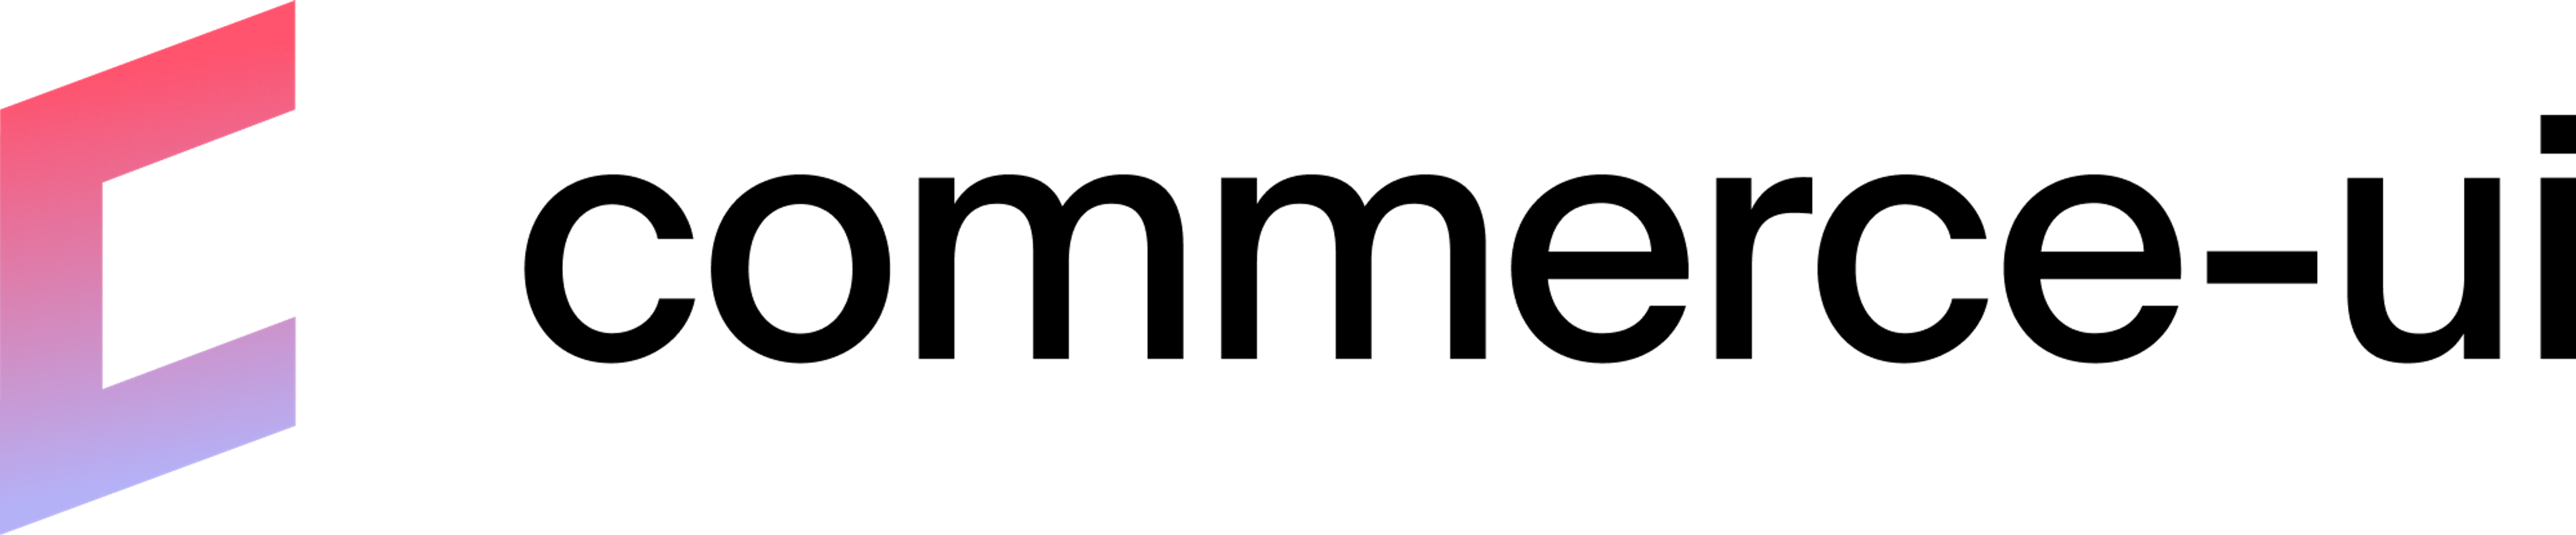 Commerce-UI logo